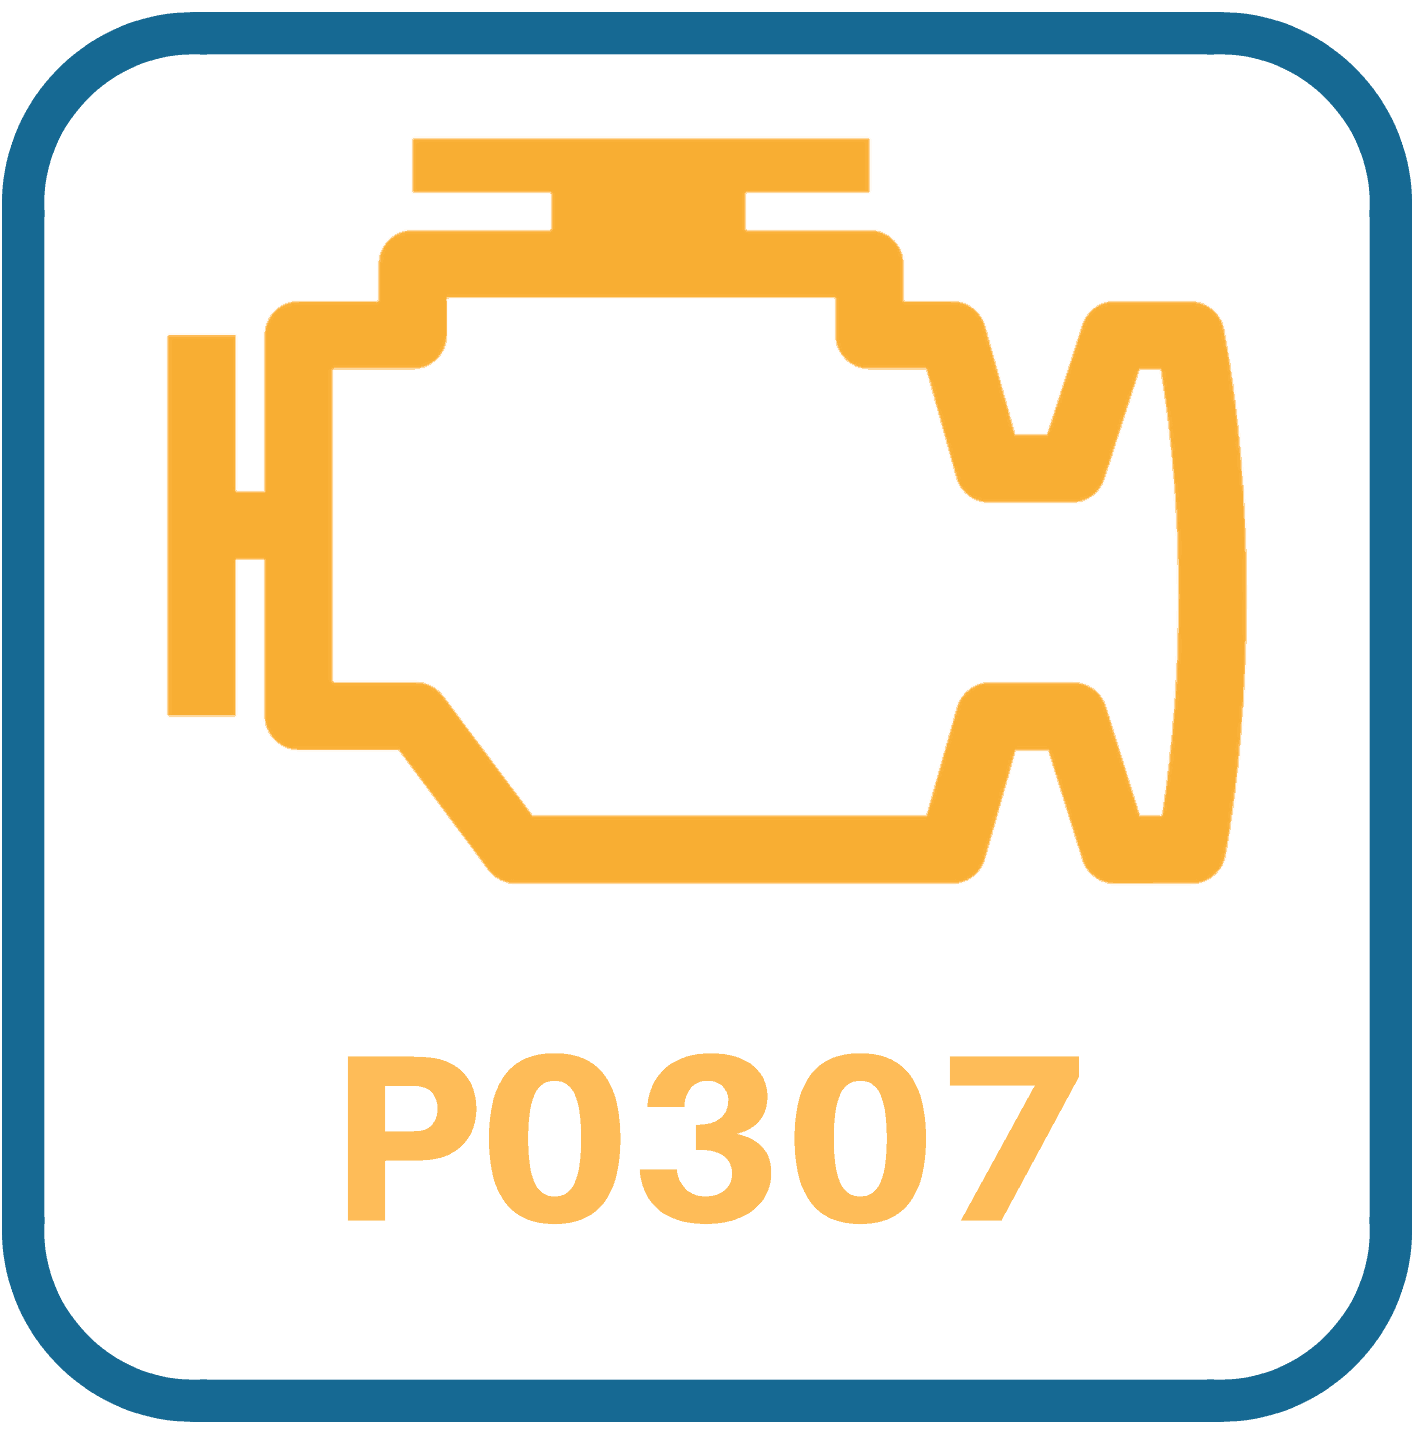 Suzuki Equator P0307 Diagnosis